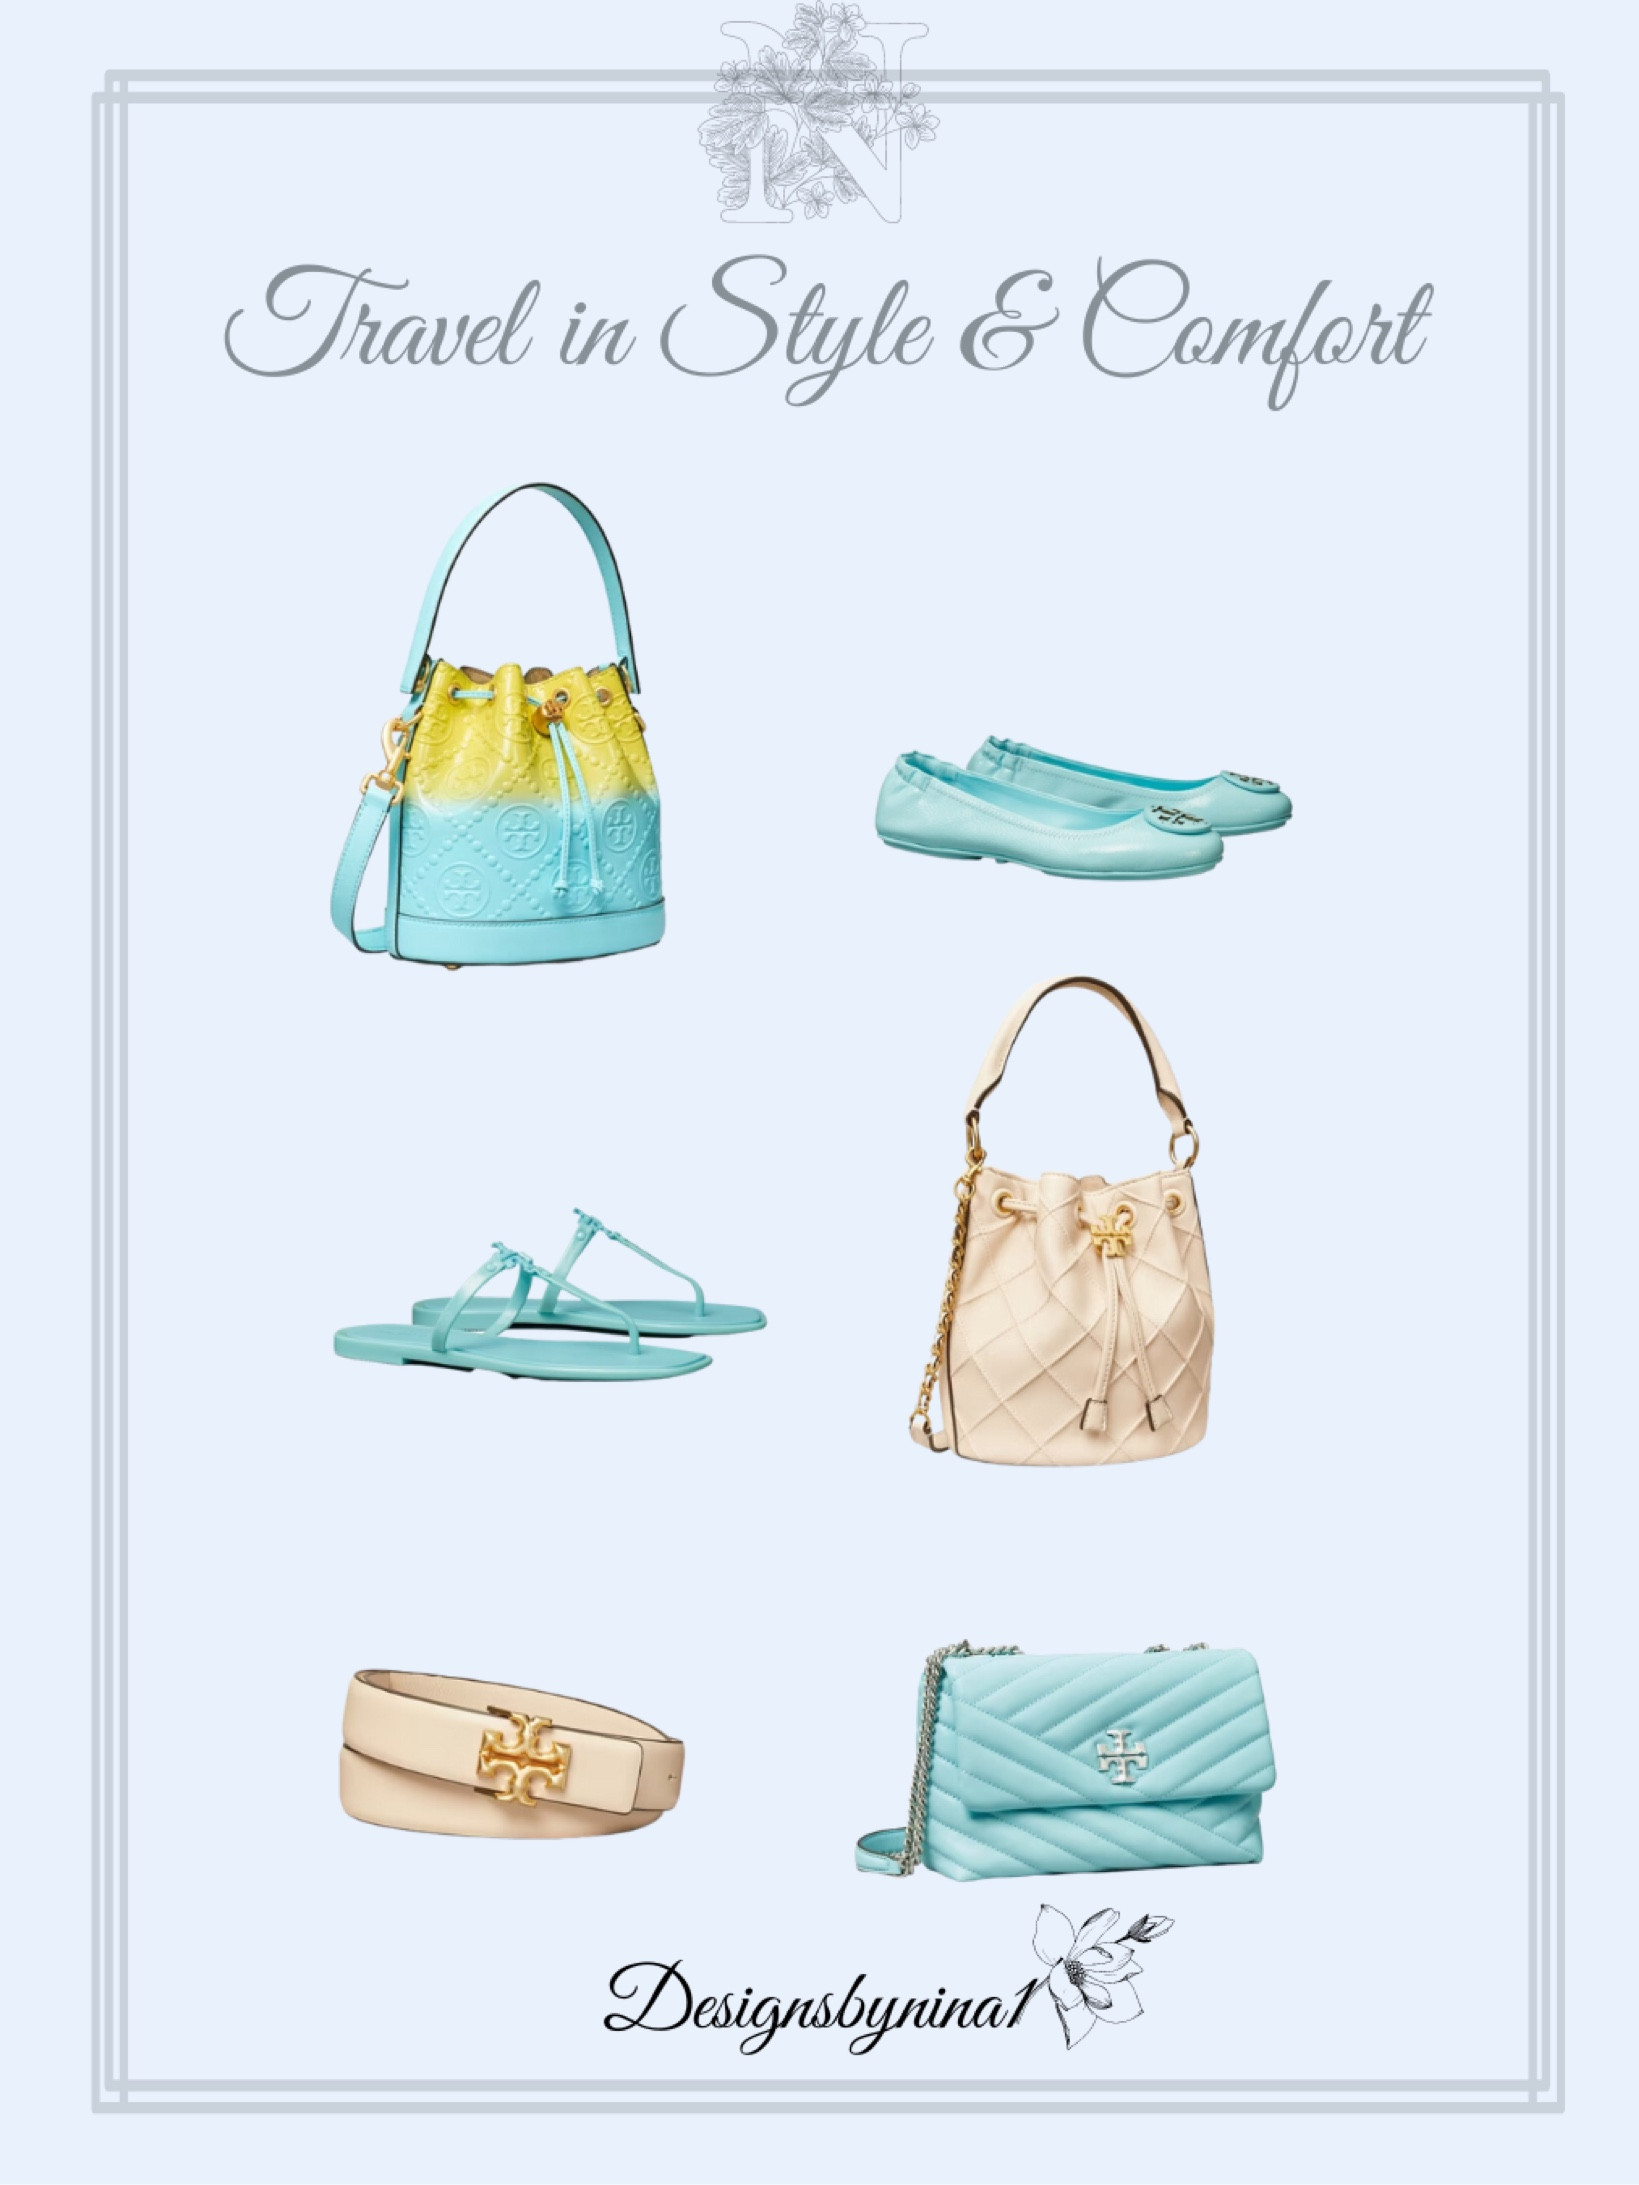 T Monogram Dip-Dye Bucket Bag: Women's Handbags